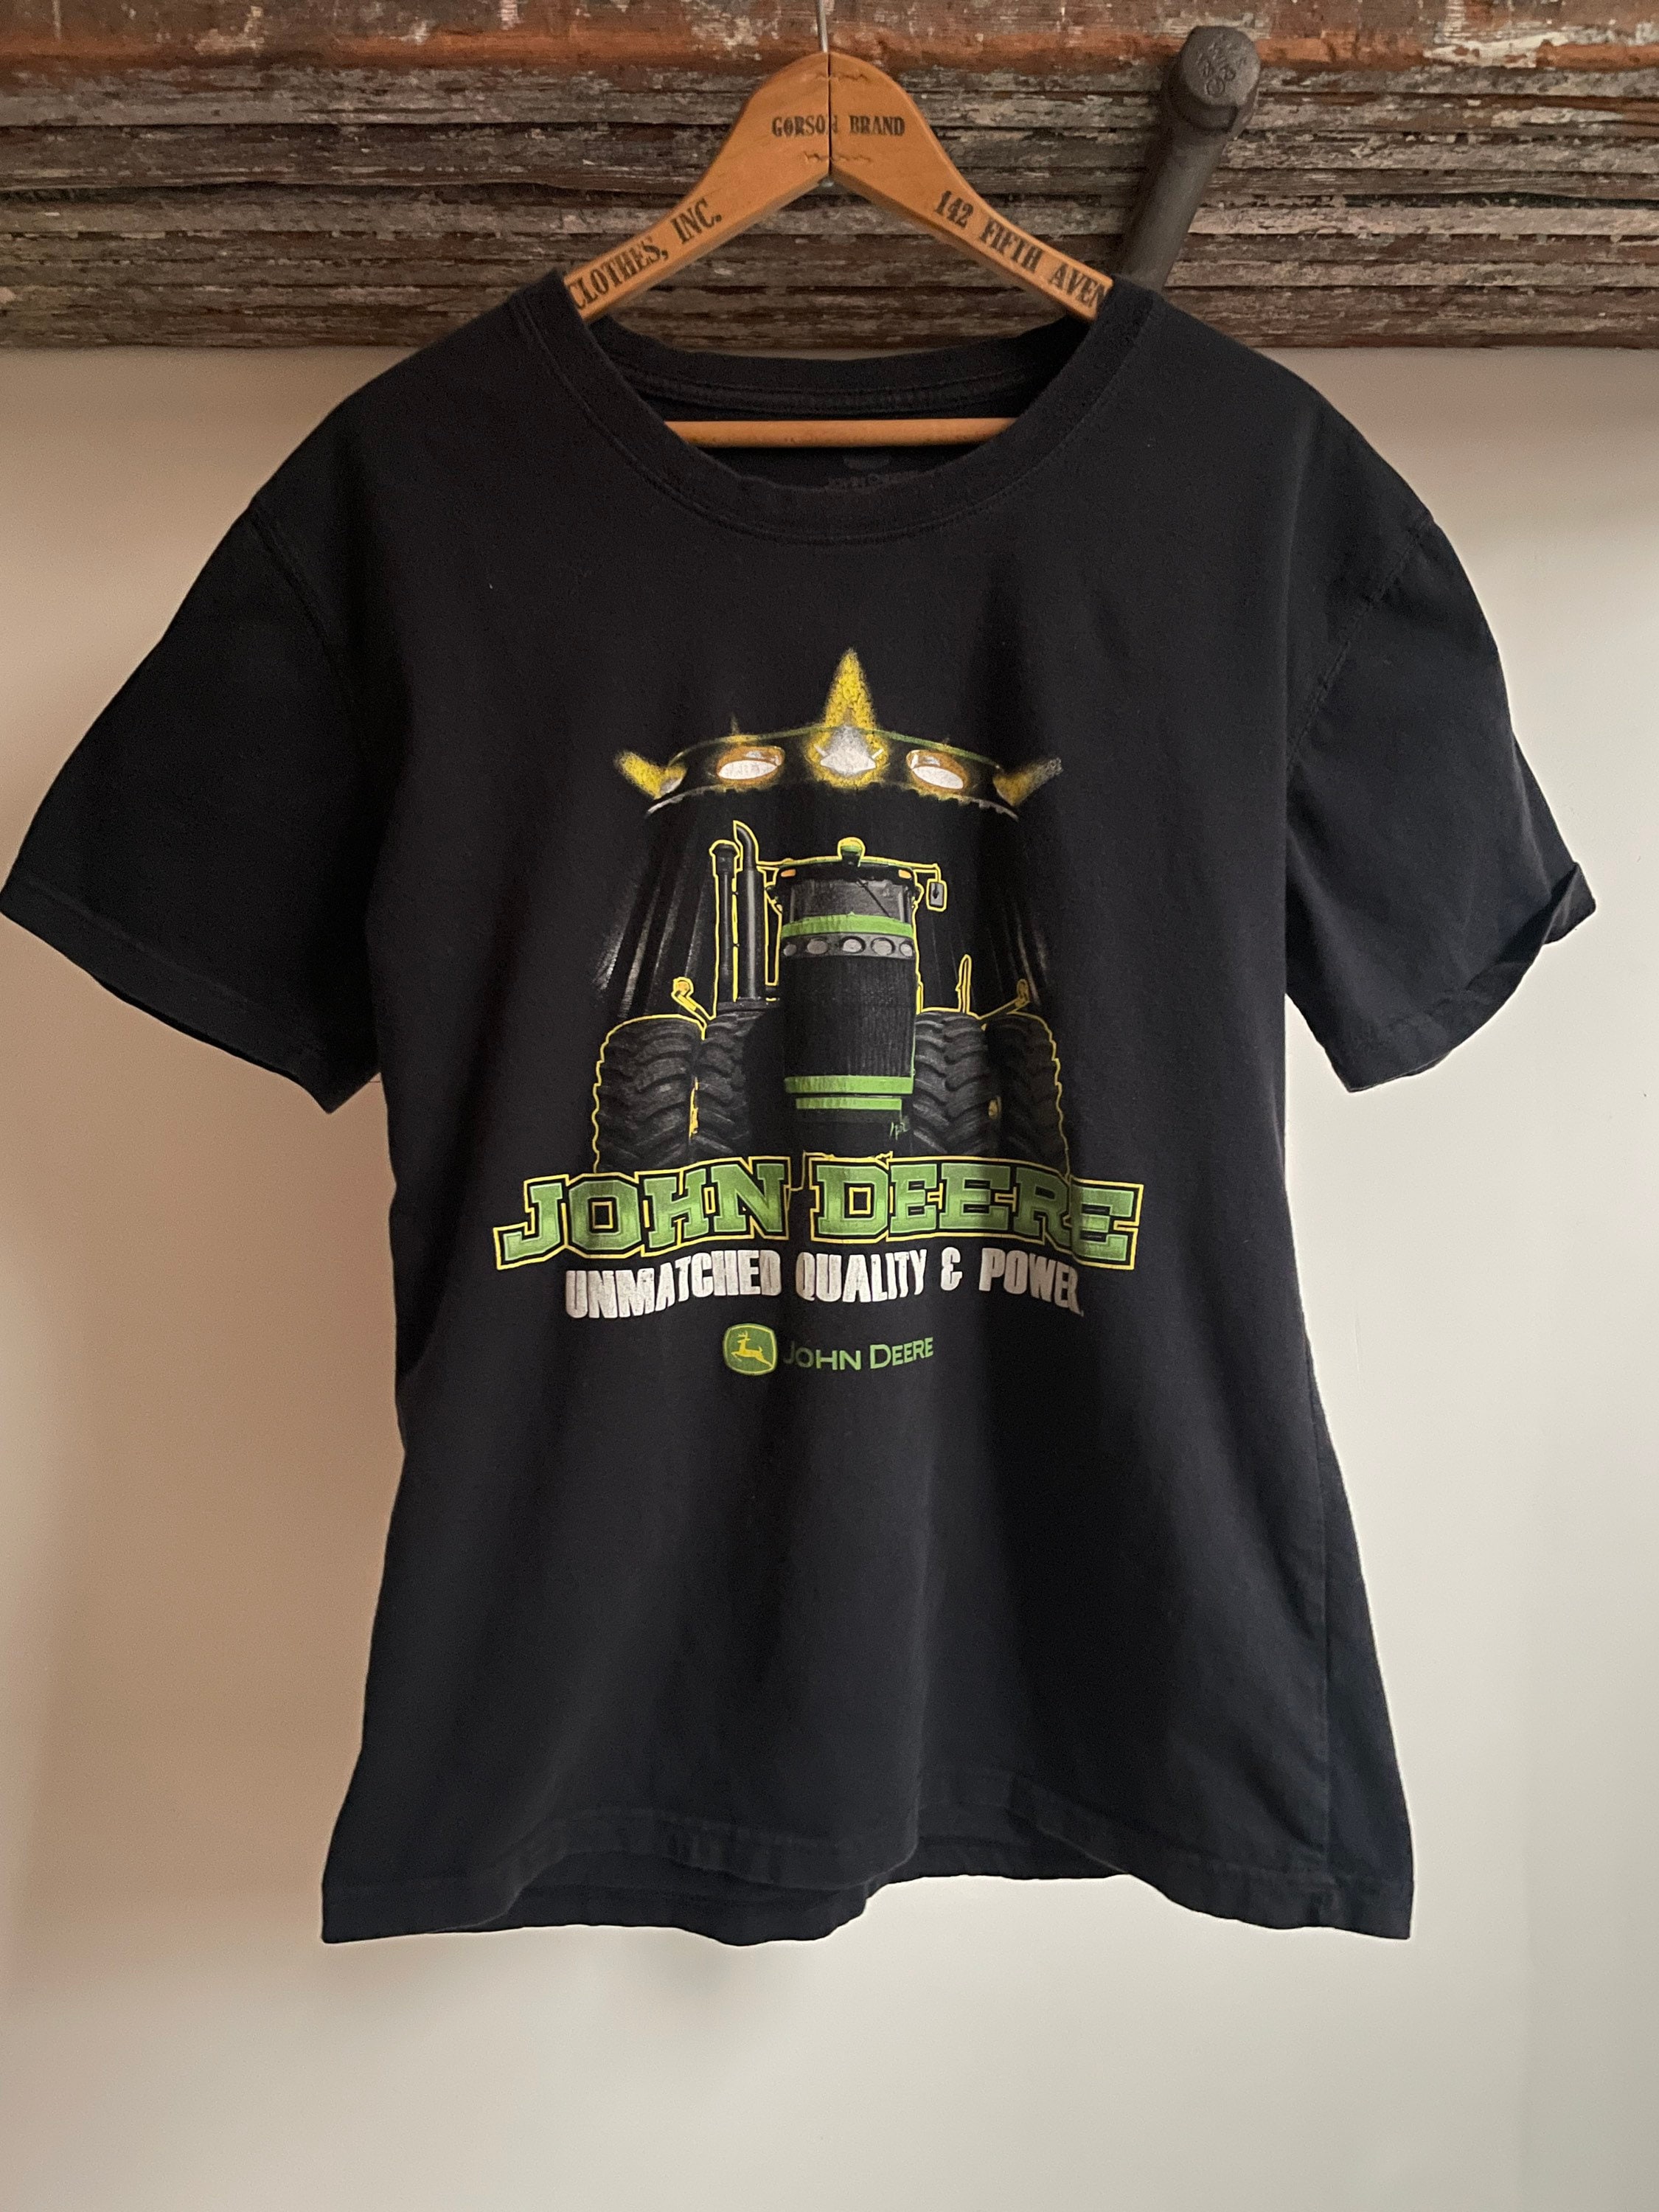 arve udføre tigger Vintage John Deere Tractor T-shirt. unmatched Quality and - Etsy